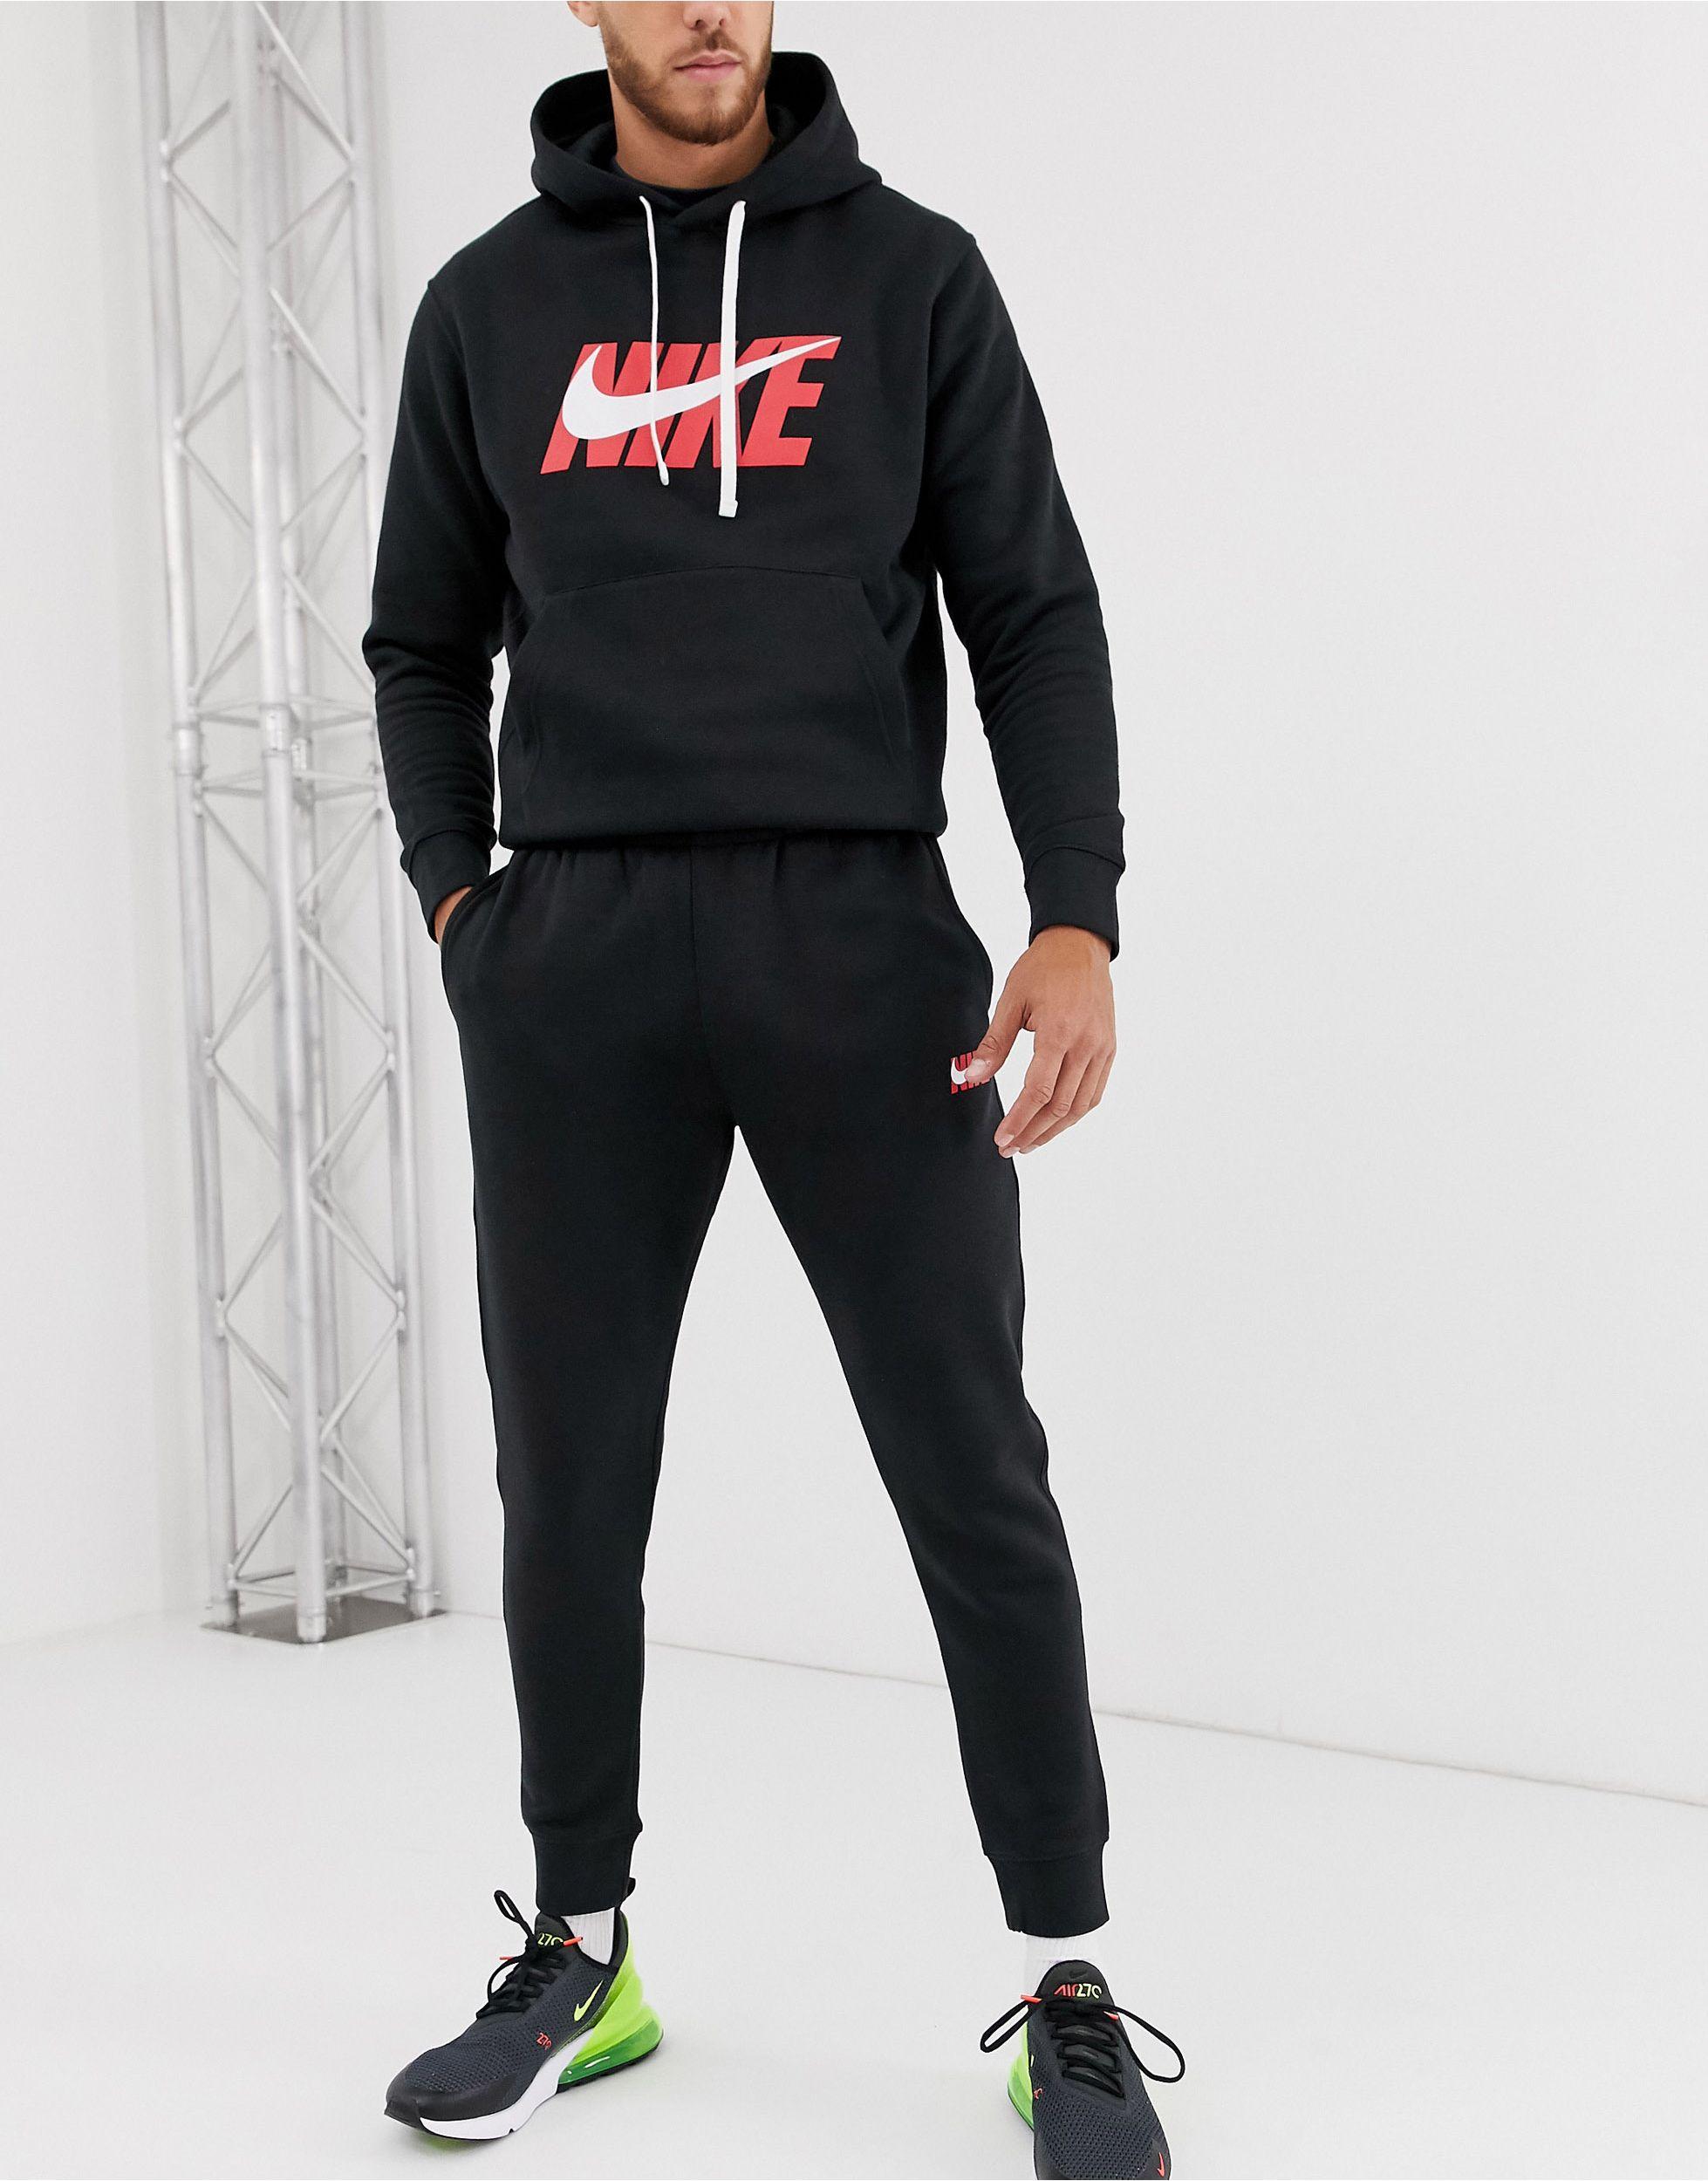 Nike Cotton Swoosh Logo Tracksuit in Black for Men - Lyst